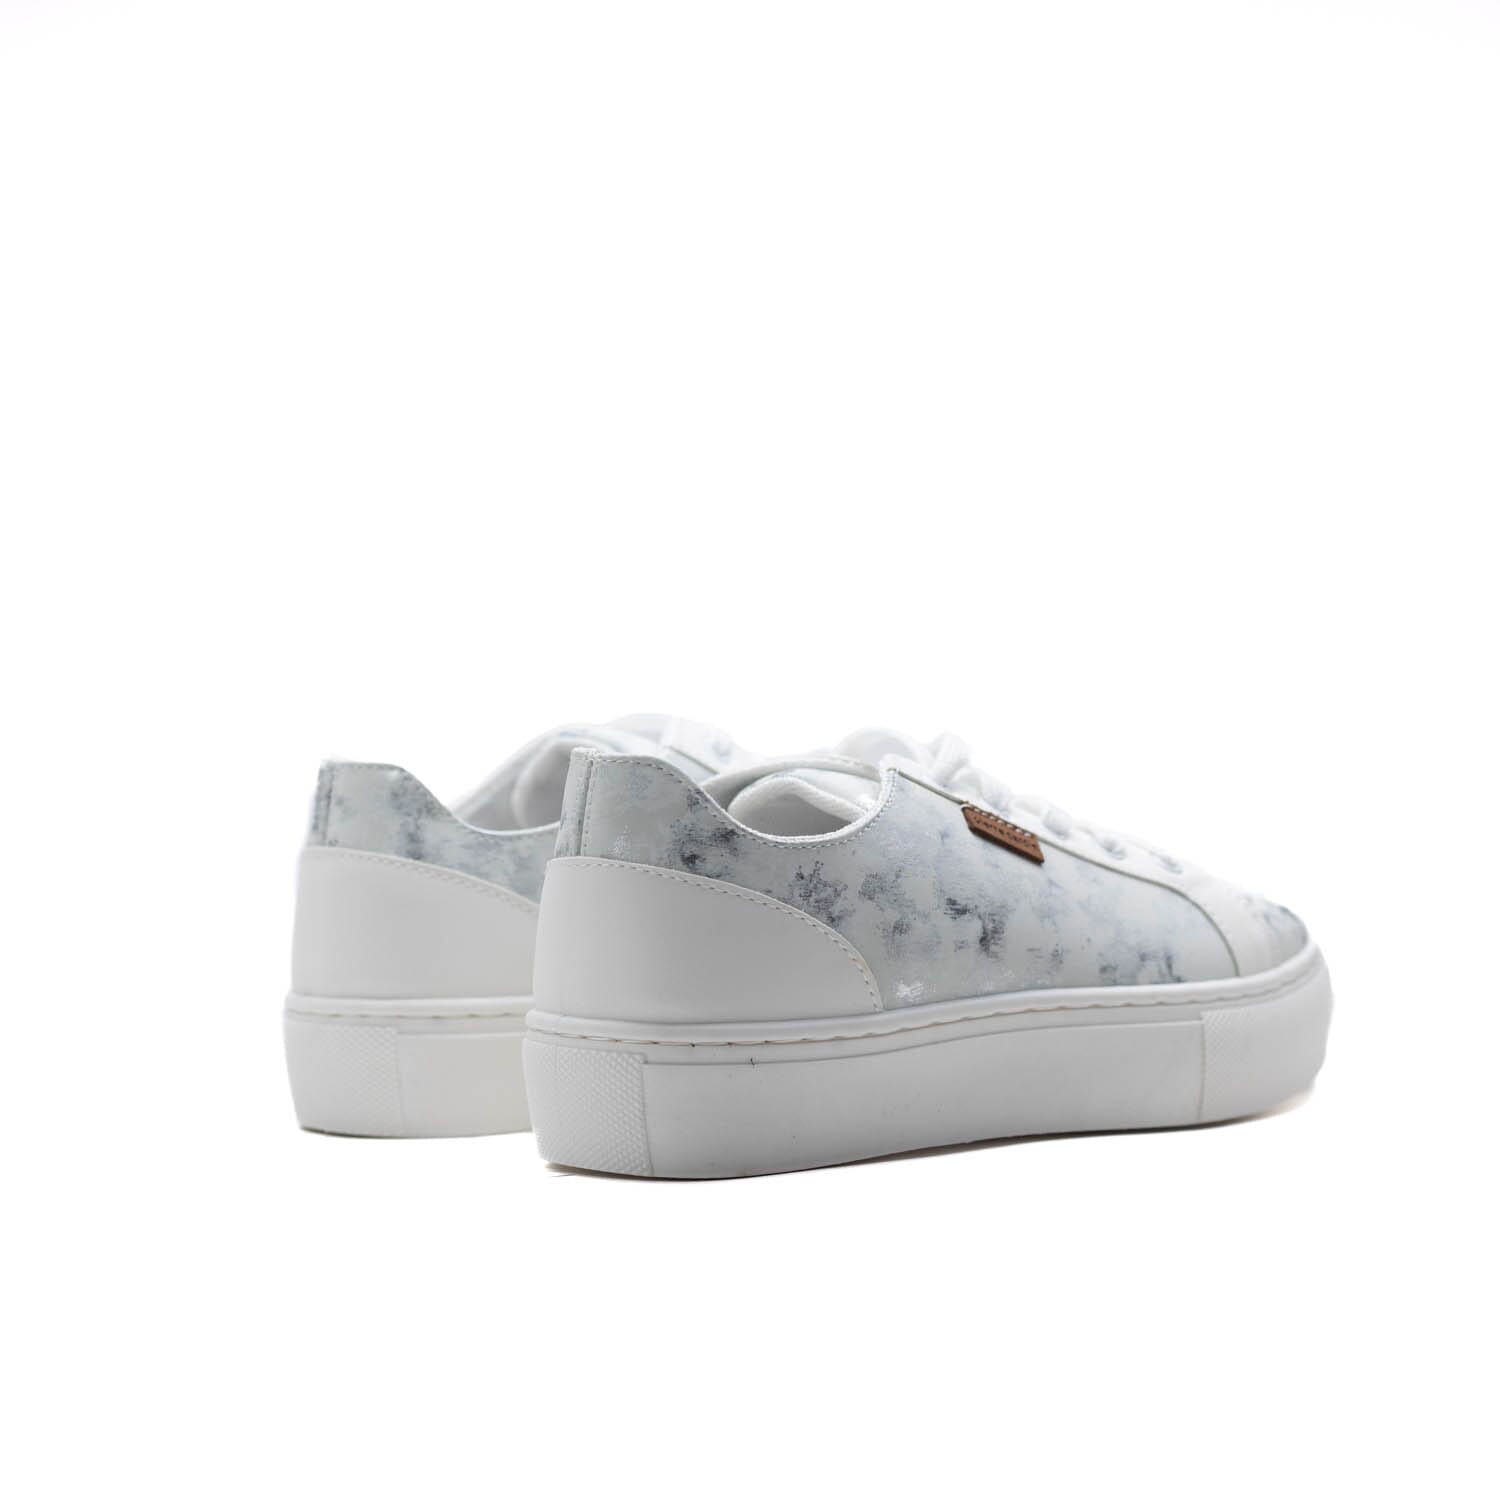 Pierre Cardin – 10321 -White / Grey – Perocili Shoes